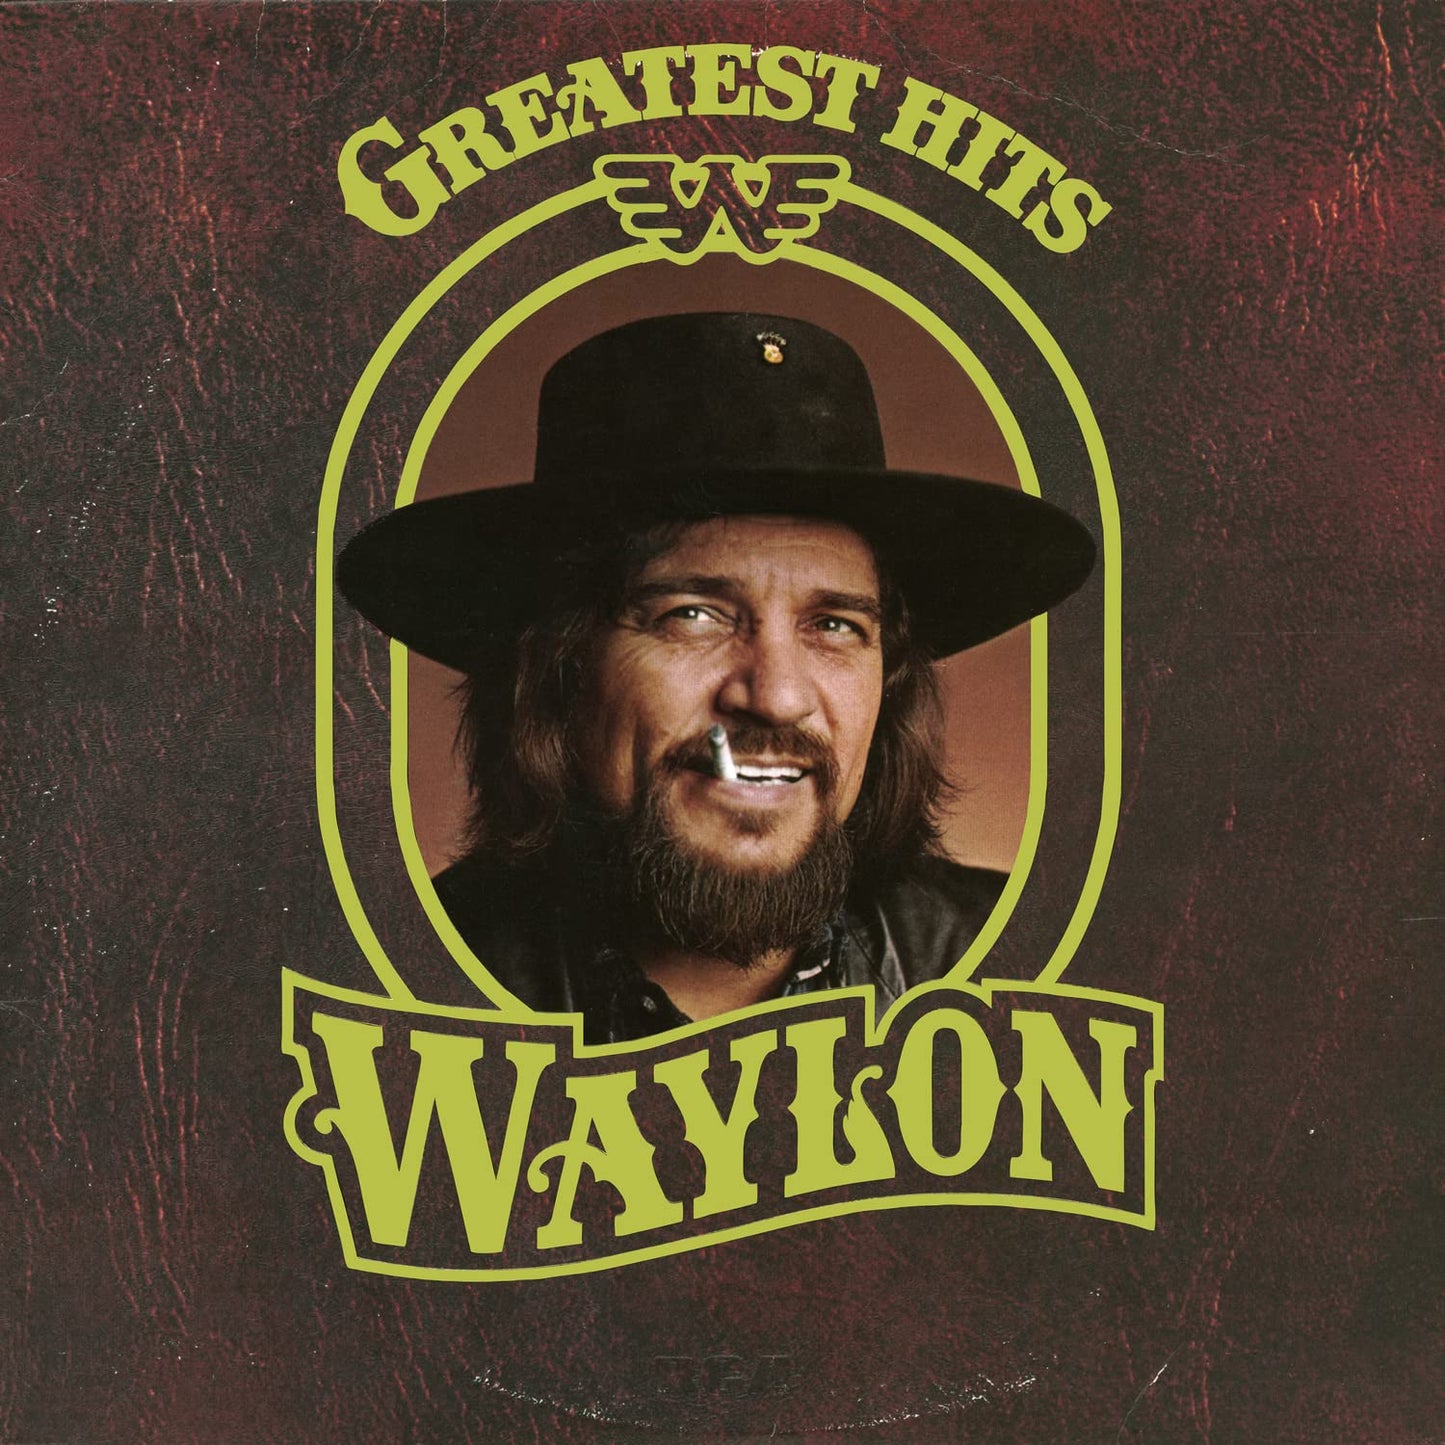 Waylon Jennings - Greatest Hits - LP